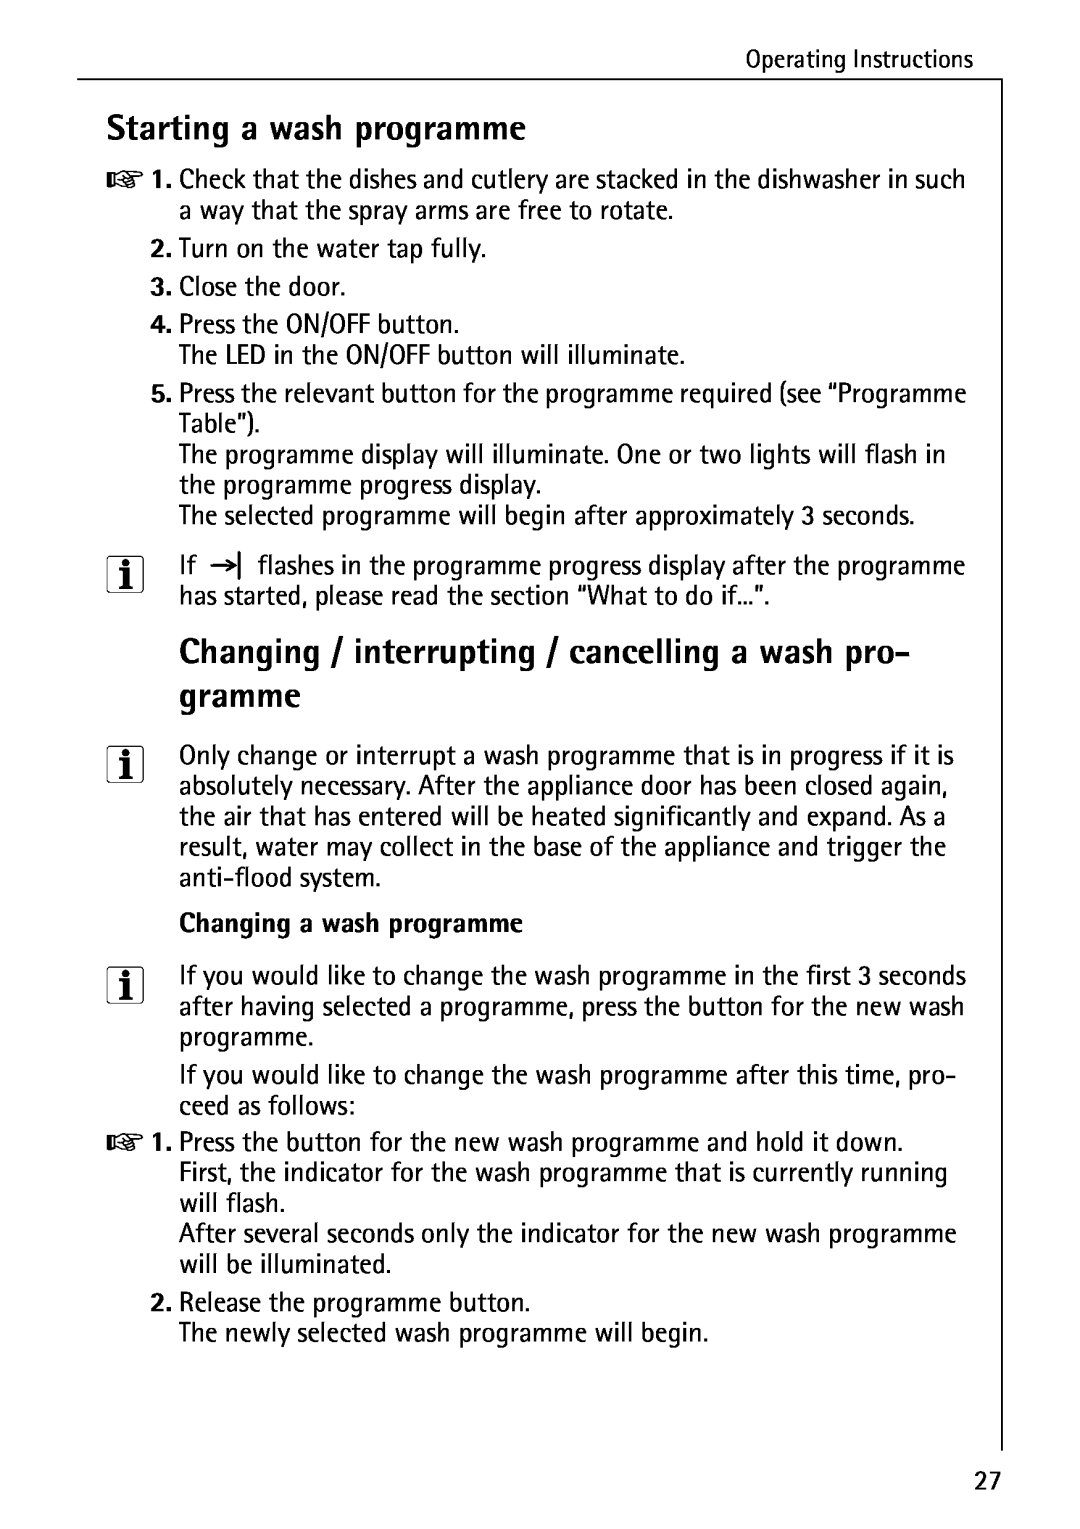 AEG 40740 manual Starting a wash programme, Changing / interrupting / cancelling a wash pro, Changing a wash programme 